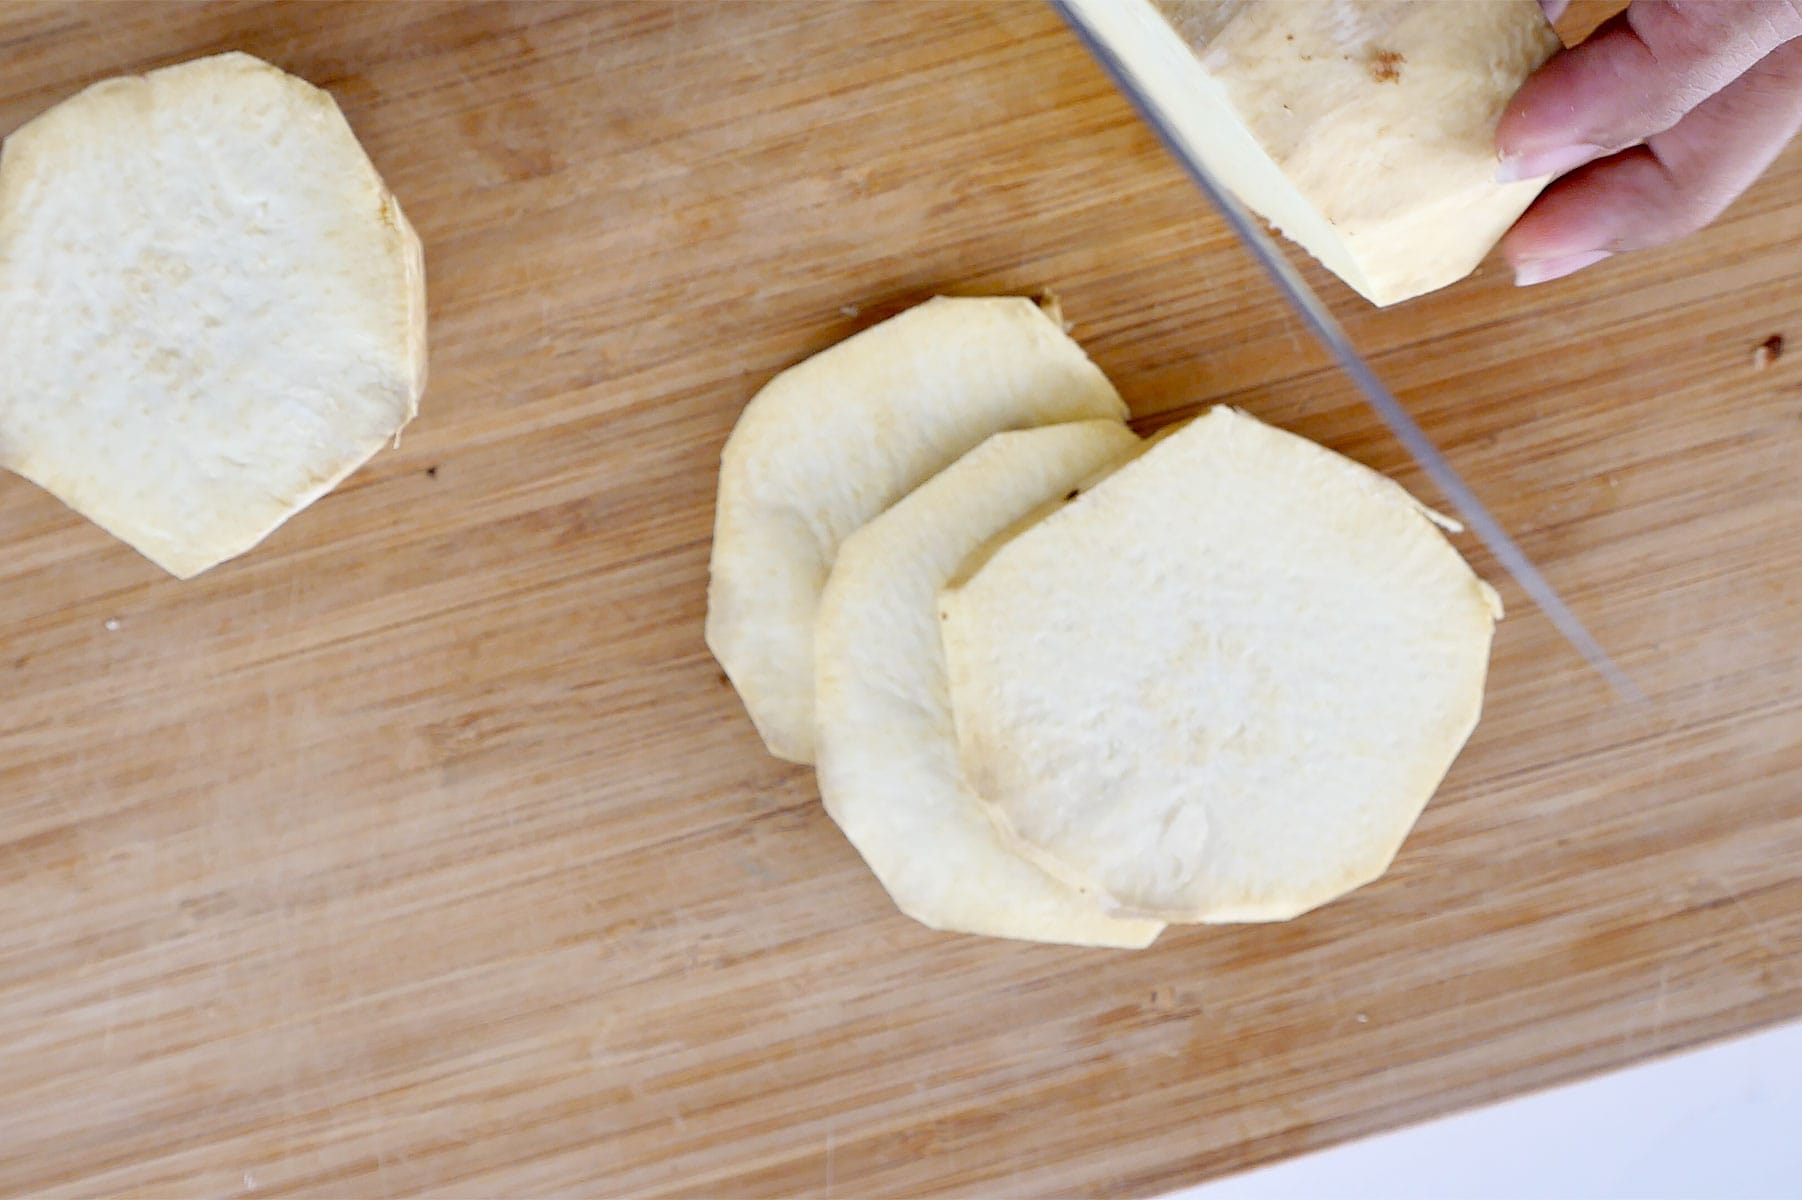 Cutting batata into slices